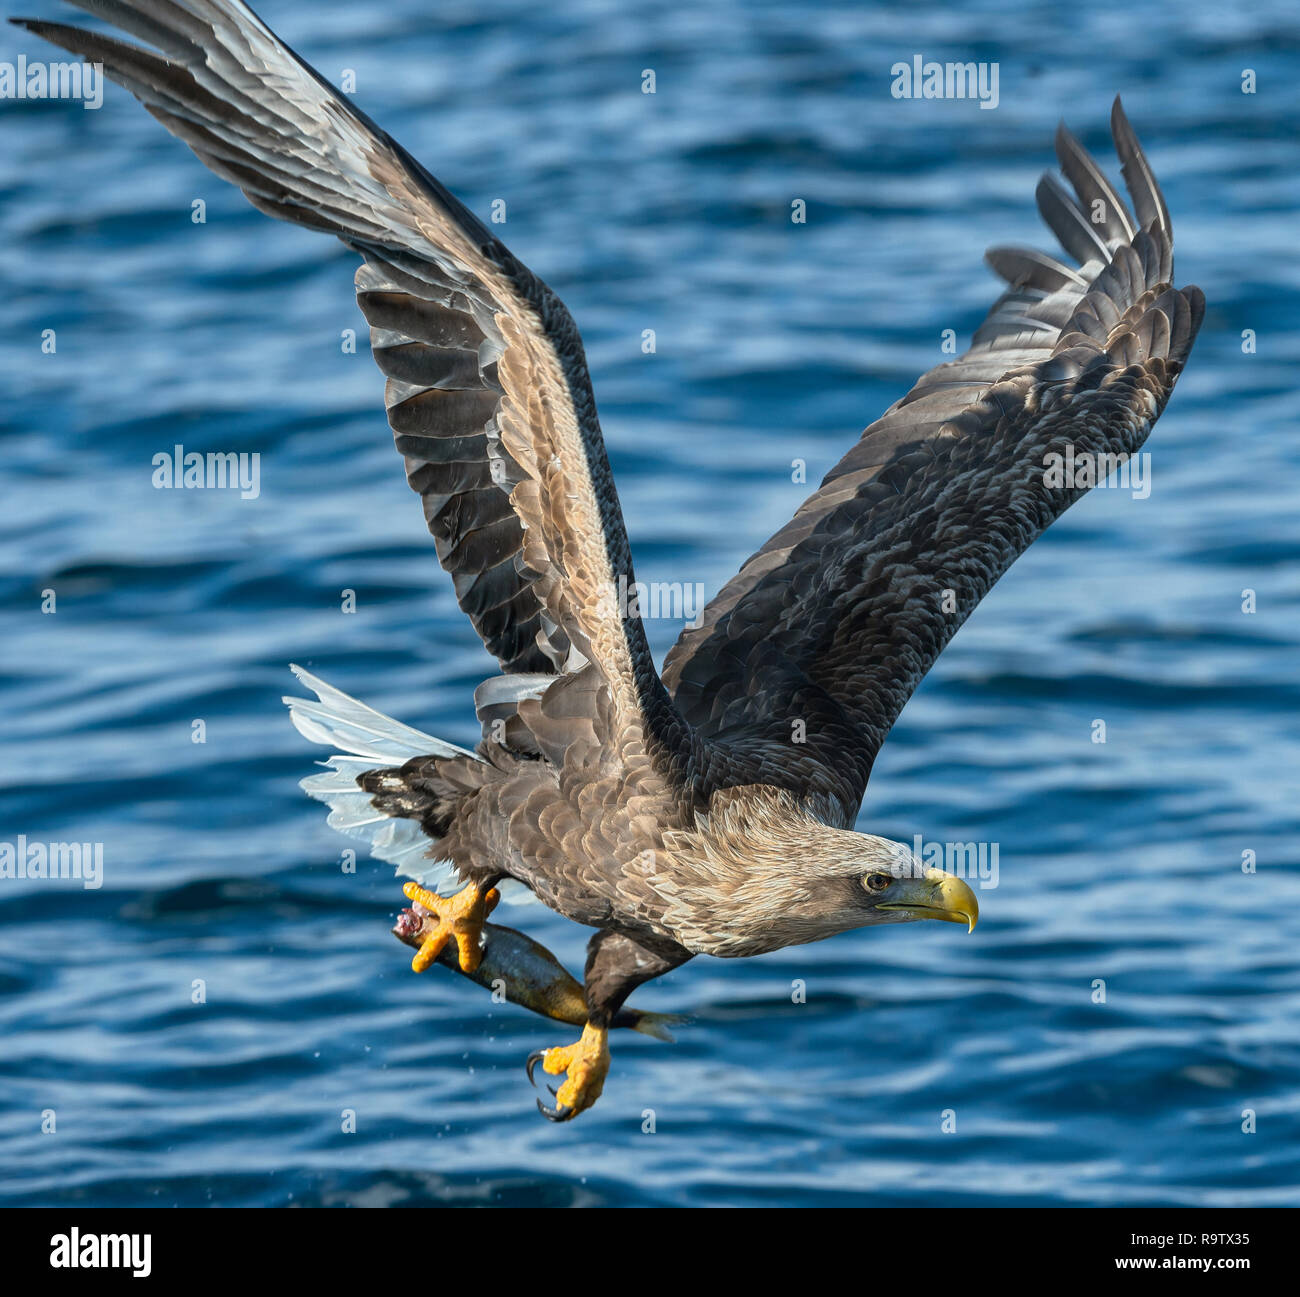 Adult White-tailed eagle fishing. Blue Ocean Background. Scientific name: Haliaeetus albicilla, also known as the ern, erne, gray eagle, Eurasian sea  Stock Photo